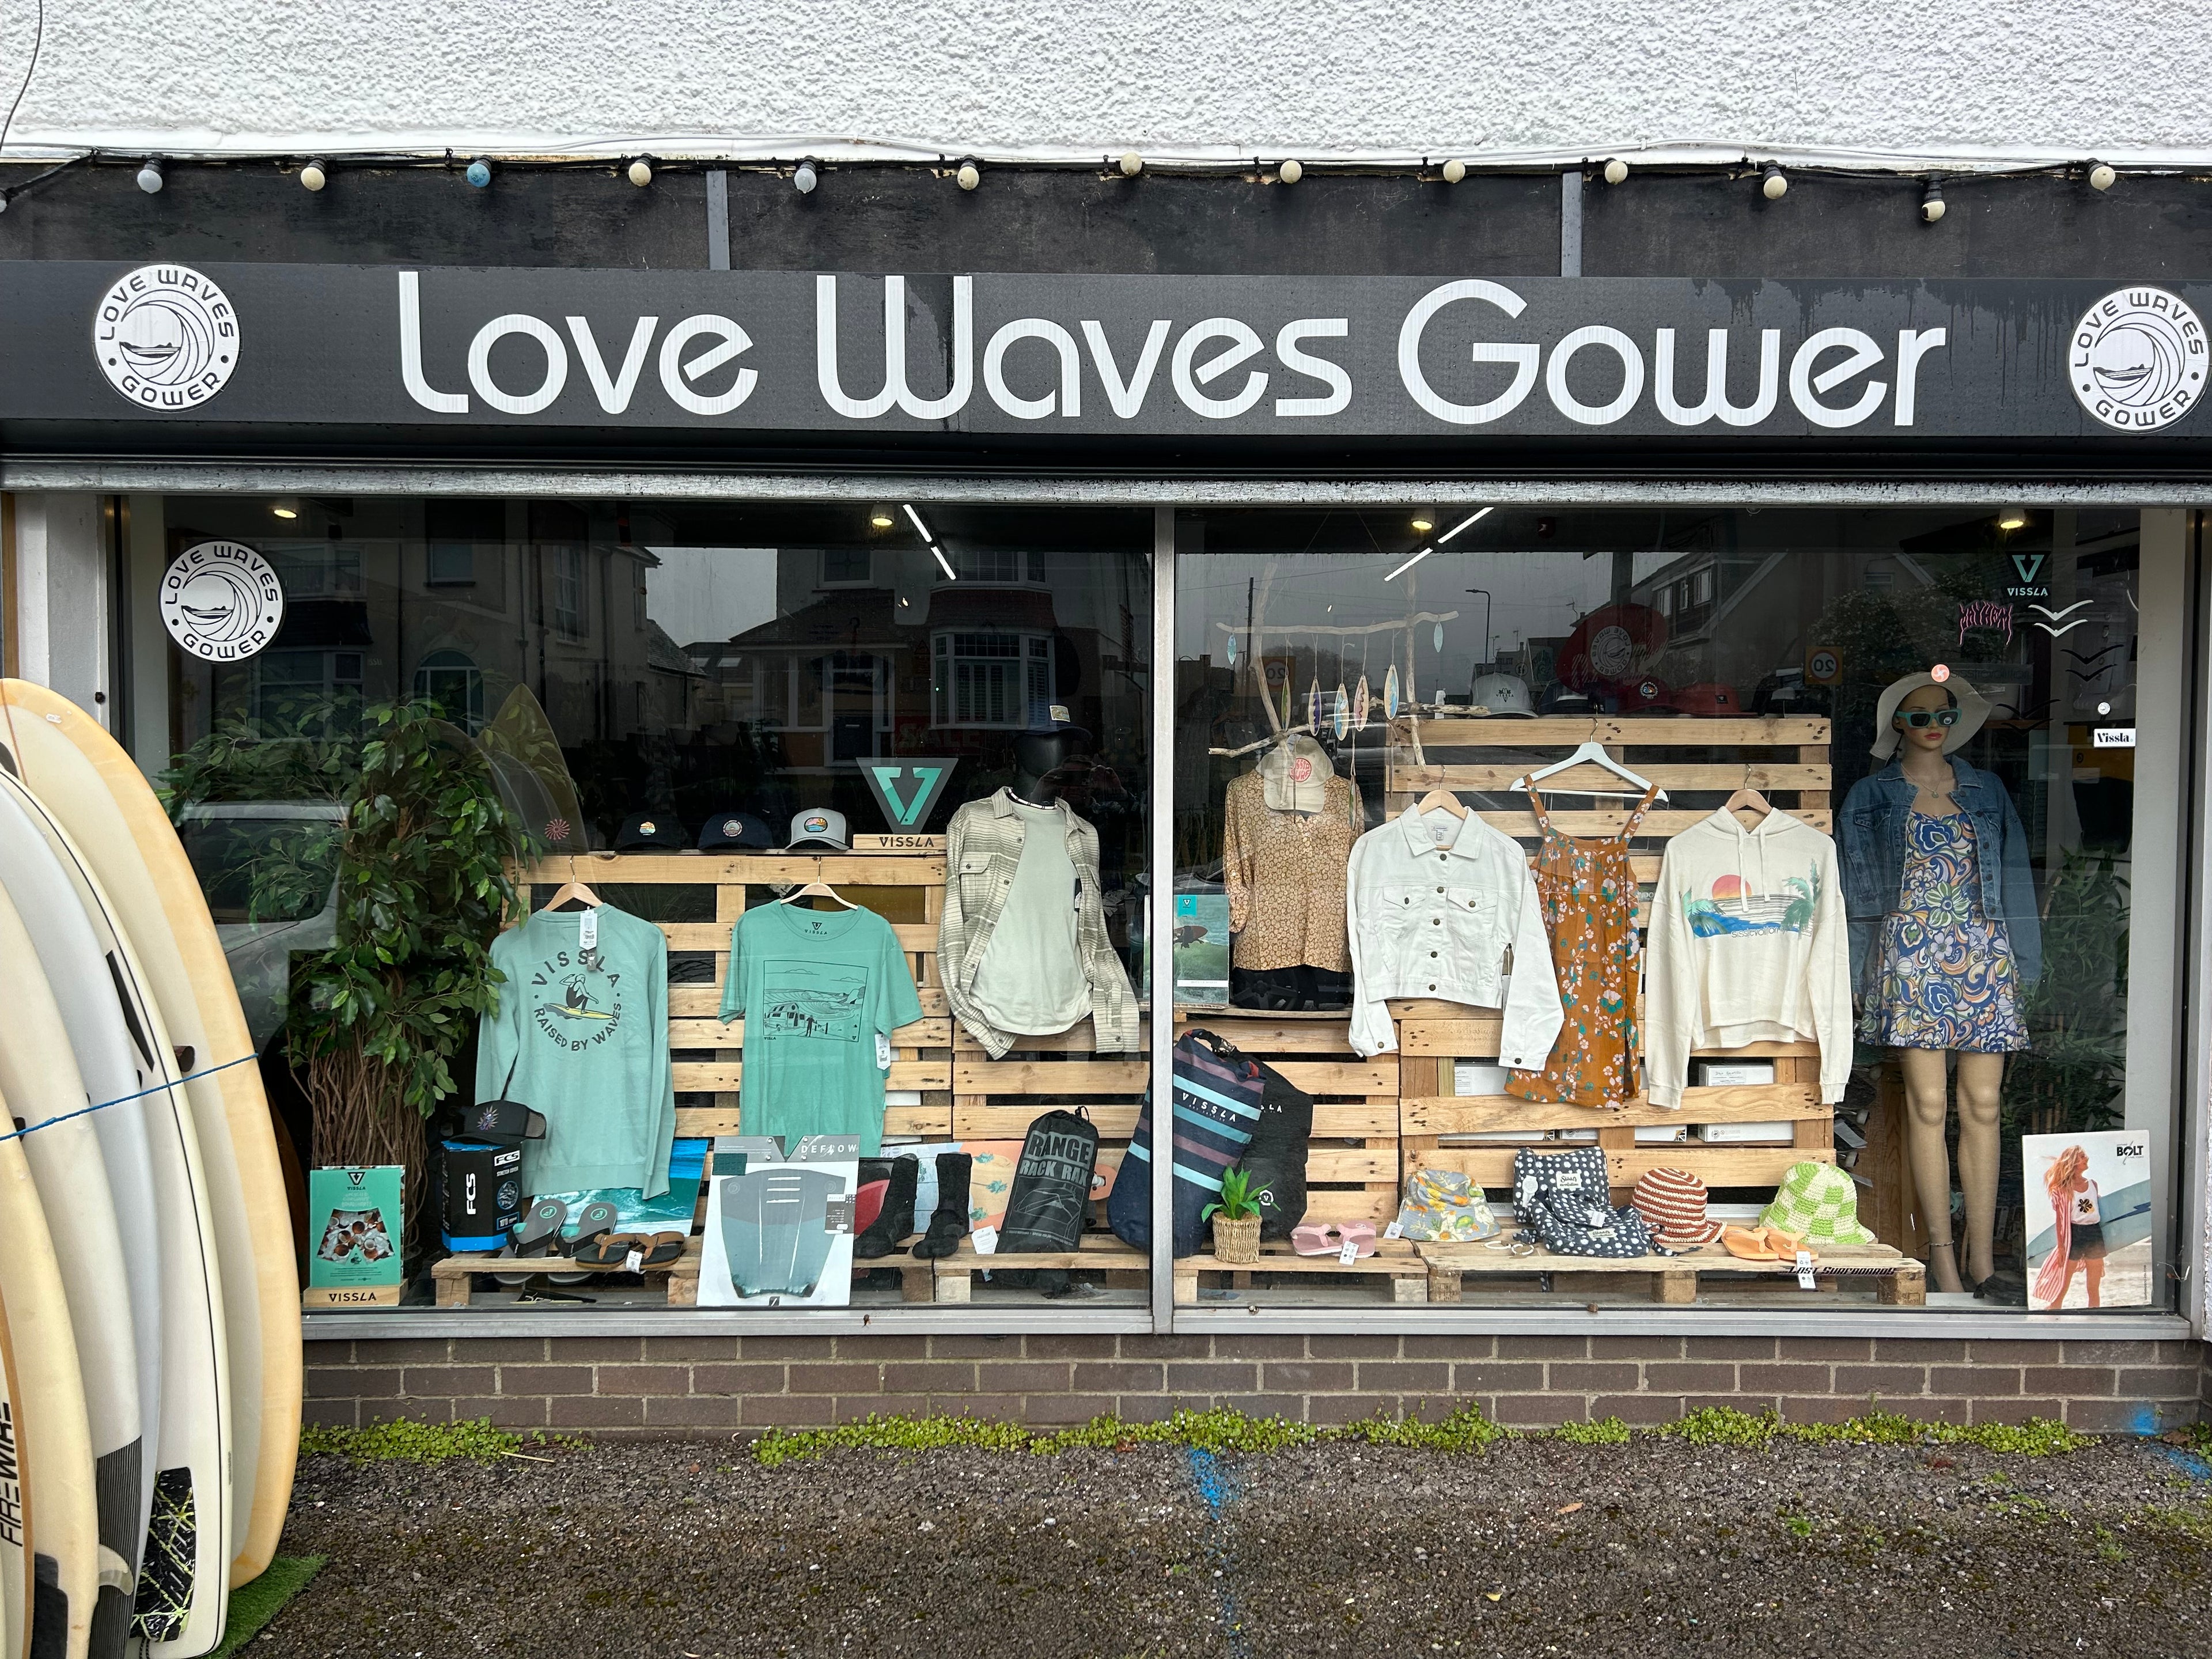 Love waves Gower Surf Shop